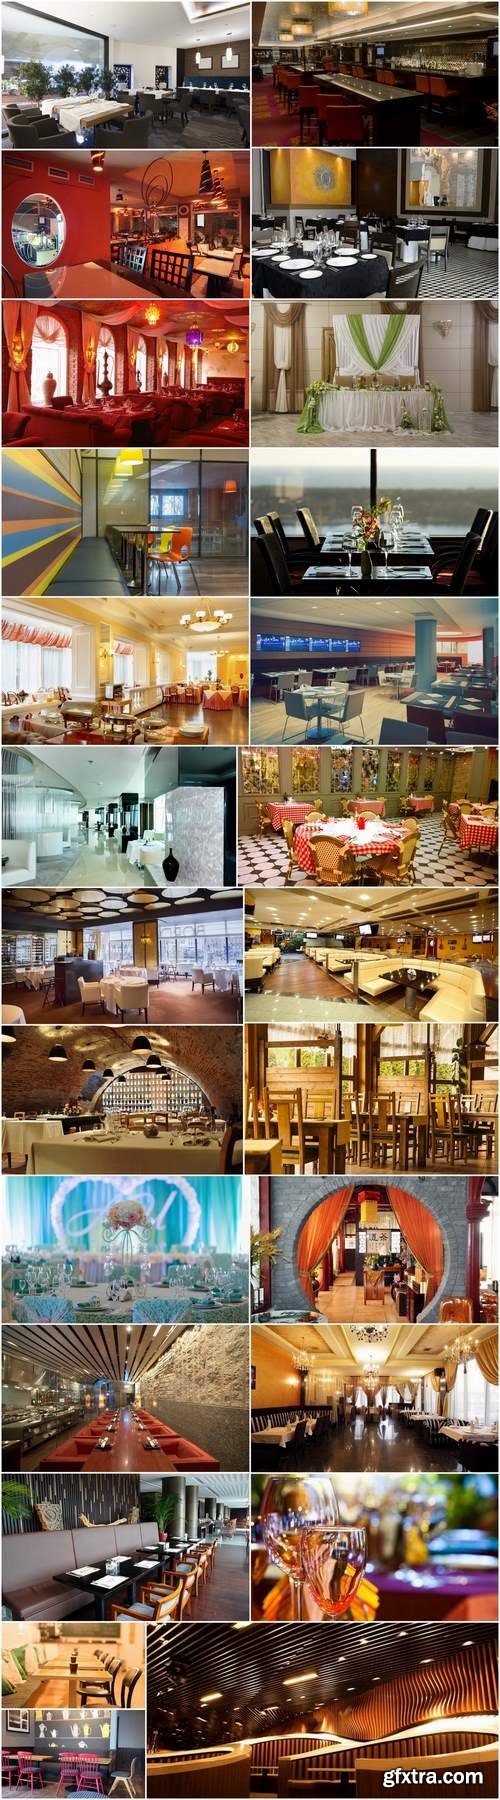 Restaurant interior room chair table banquet hall 25 HQ Jpeg